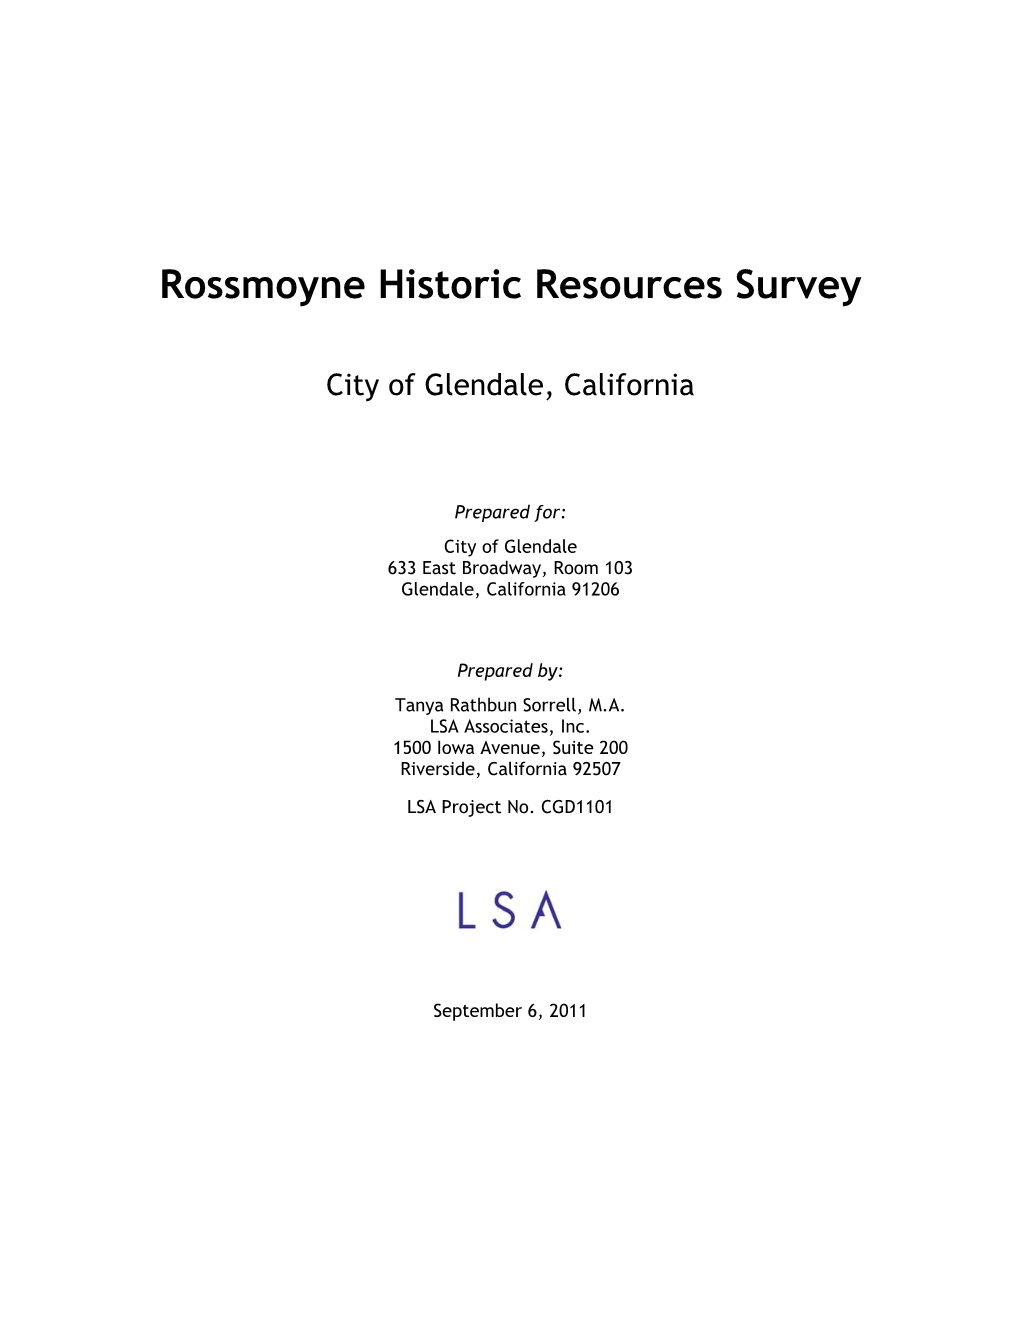 Rossmoyne Historic Resources Survey